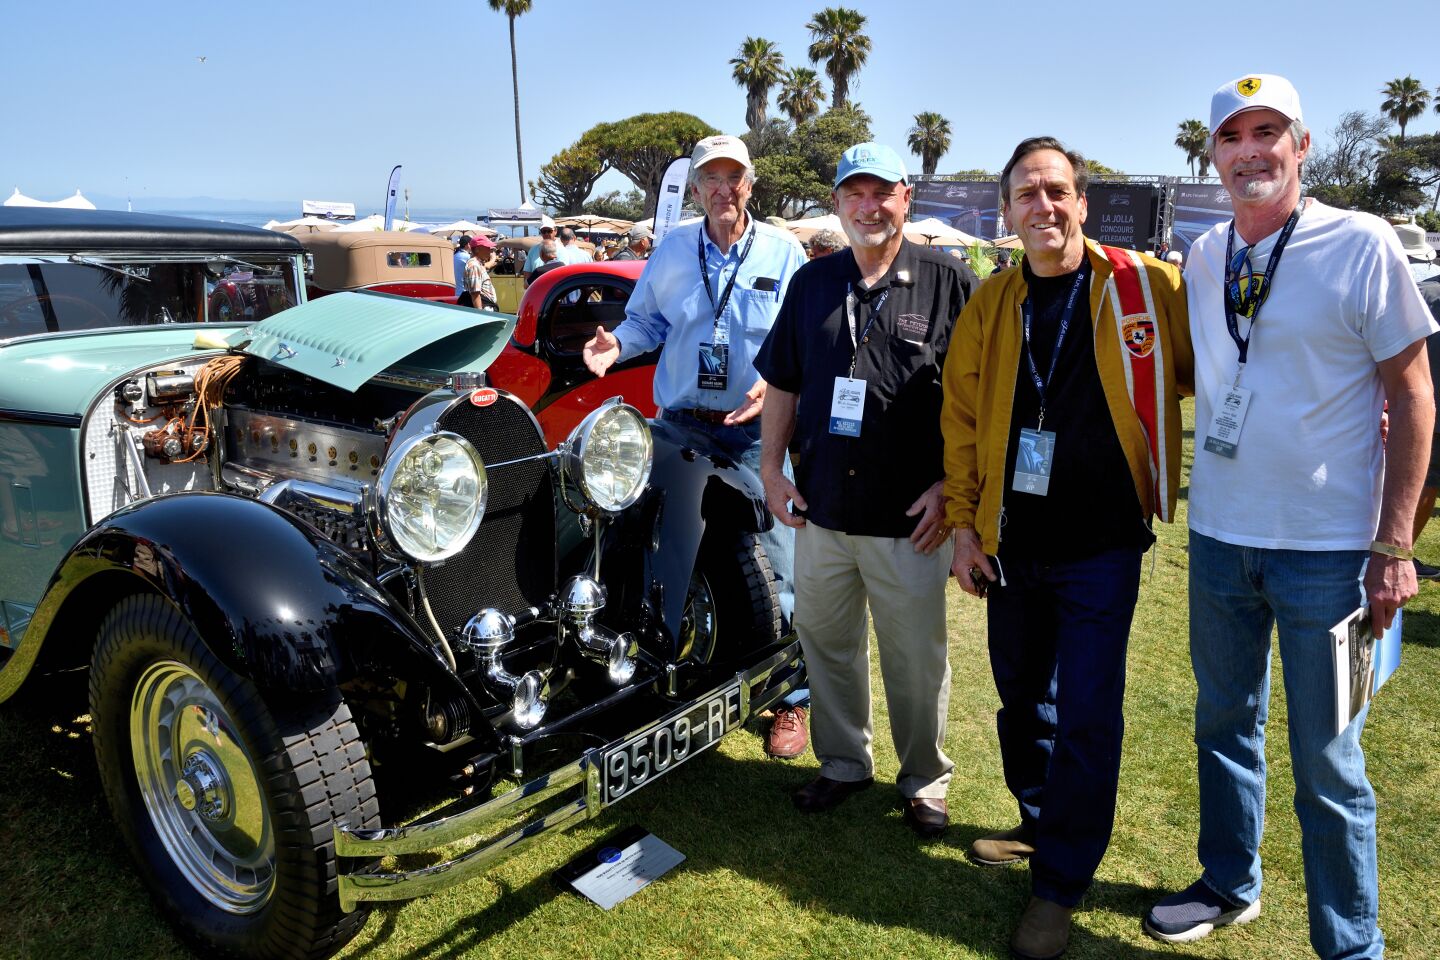 Richard Adams (owner of the 1930 Type 46 Bugatti), Michael Adams (car restorer), Shawn Styles, Michael Morgan